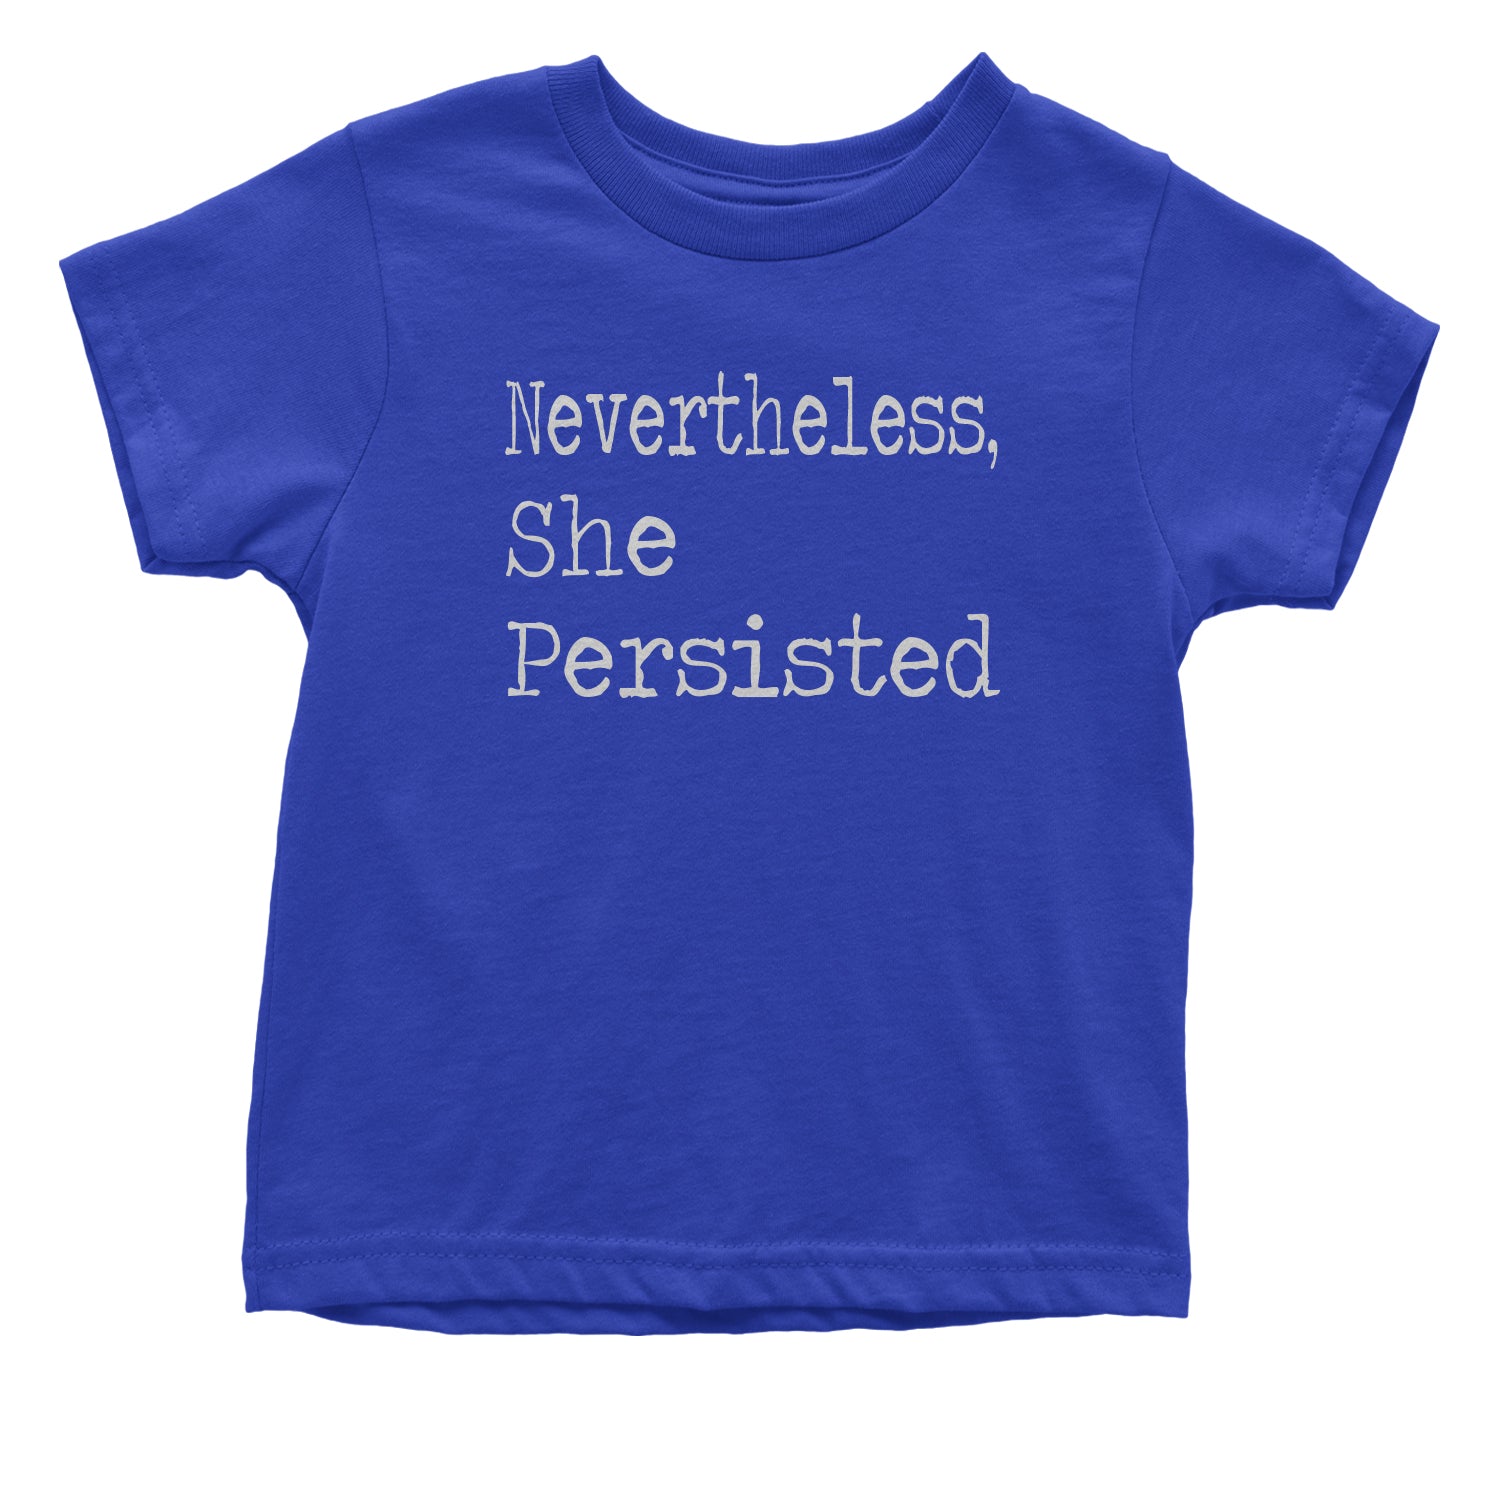 Nevertheless, She Persisted Toddler T-Shirt 2020, feminism, feminist, kamala, letlizspeak, mamala, mcconnell, mitch, momala, mommala by Expression Tees